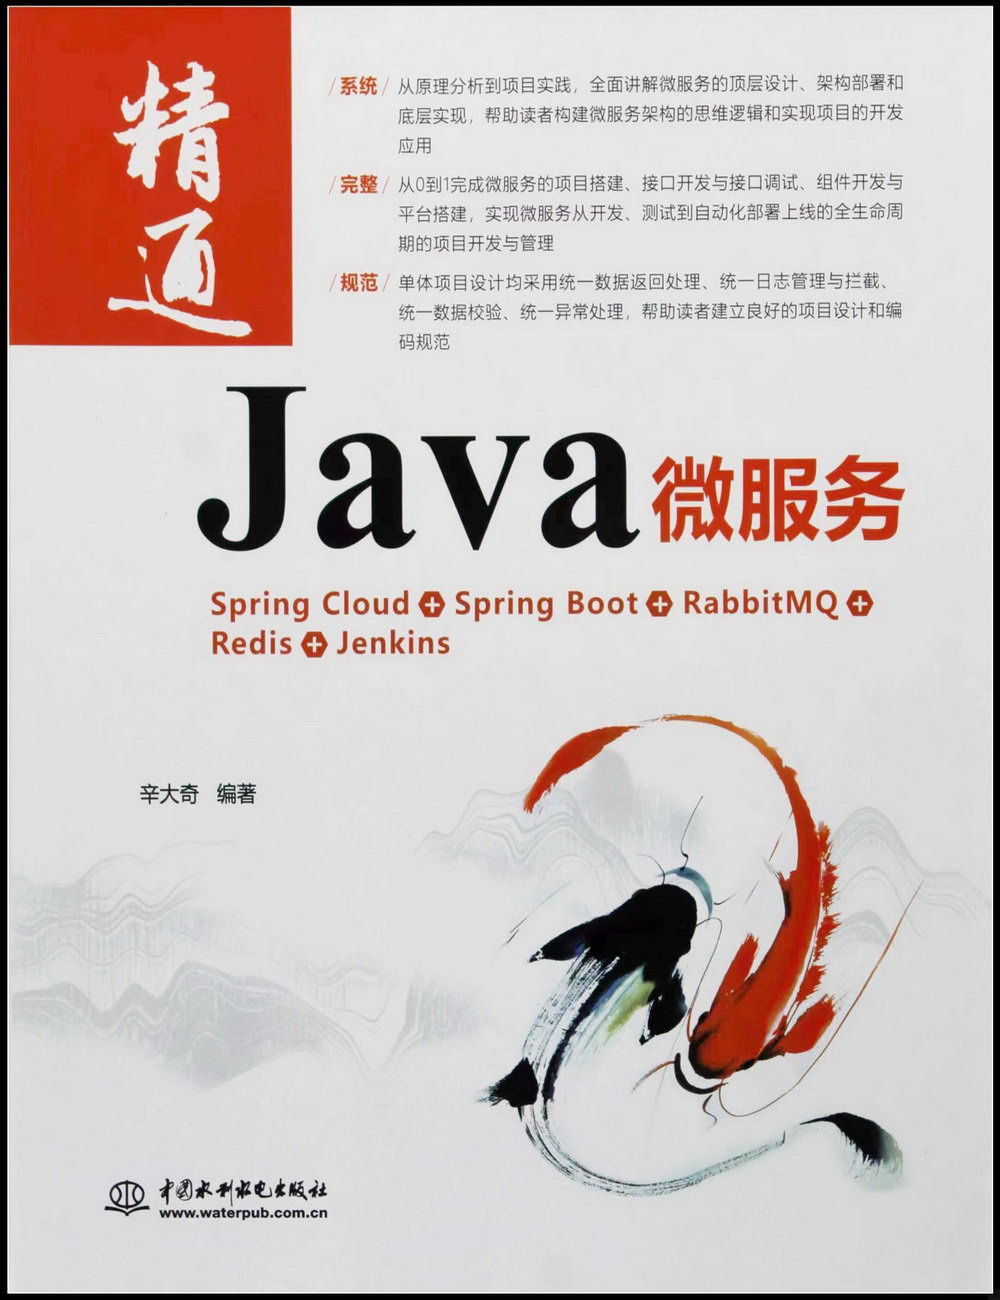 Java微服務